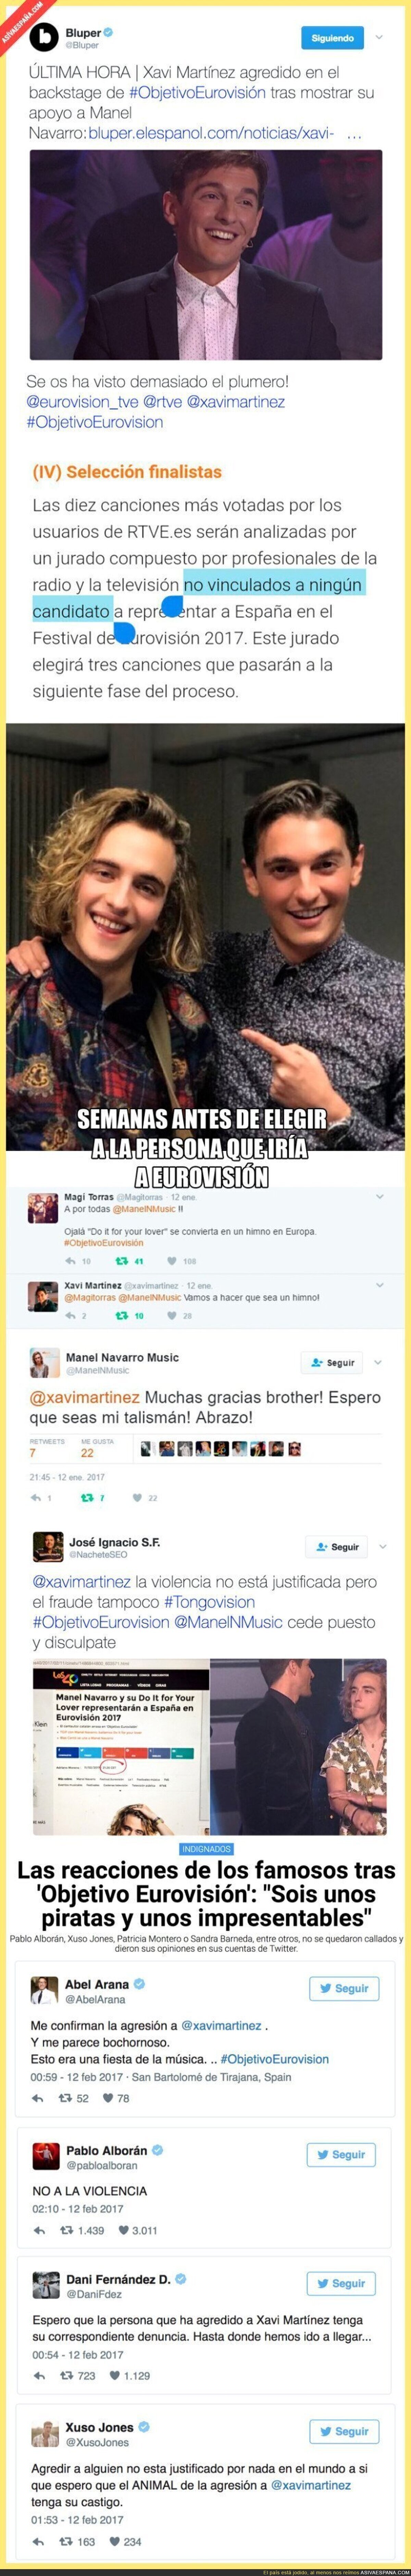 La agresión a Xavi Martínez tras elegir a Manel Navarro para ir a Eurovisión